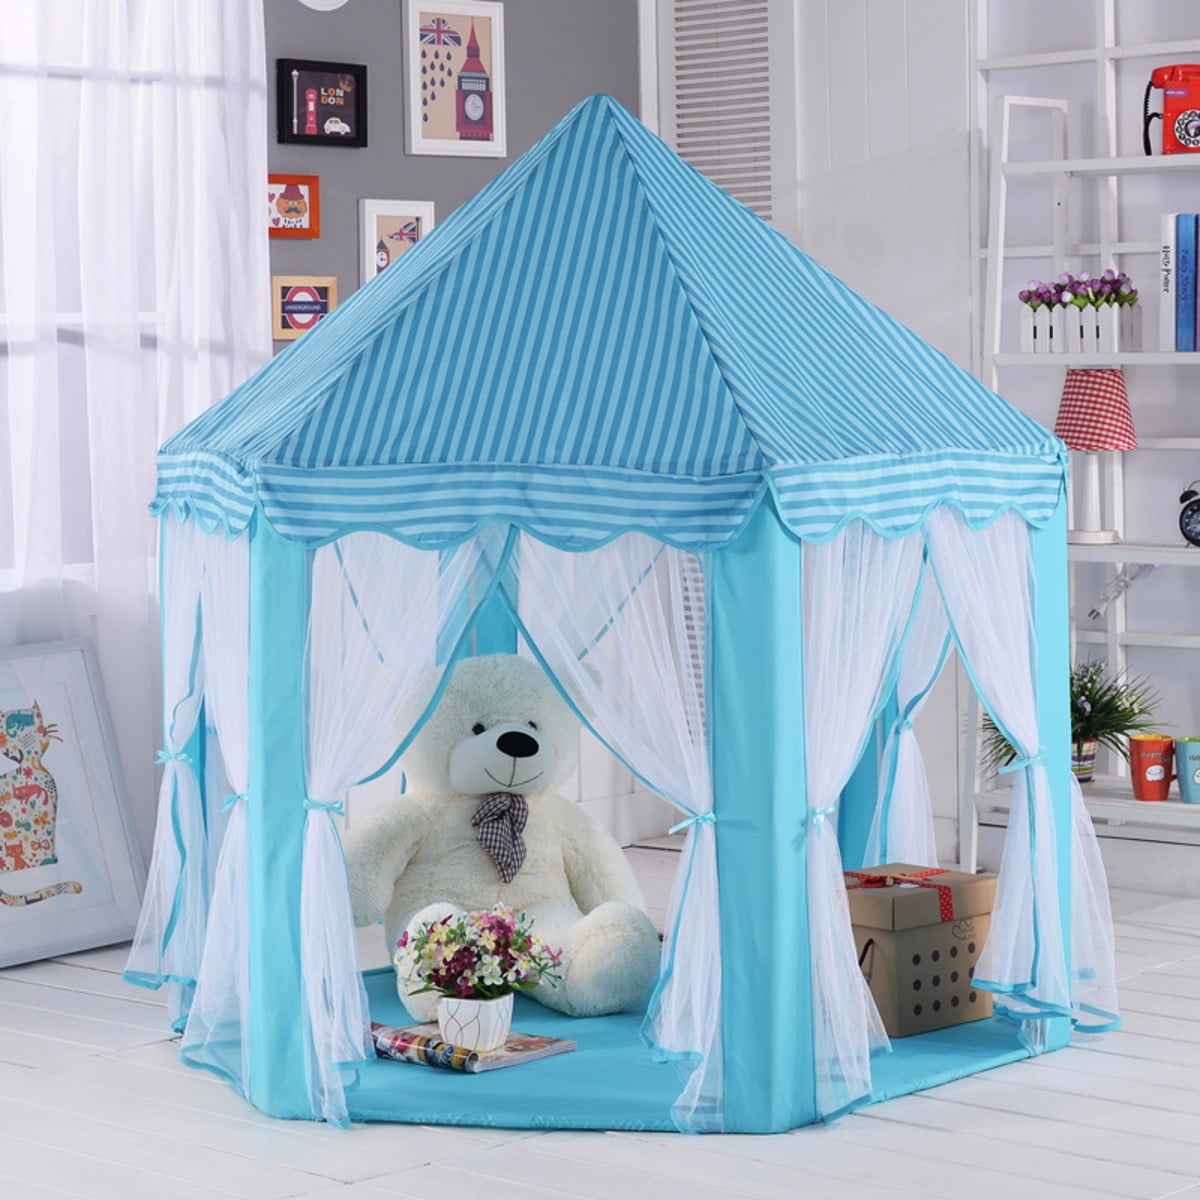 Prince Princess Kid Castle Play Tent Outdoor Indoor Portable Children Baby 